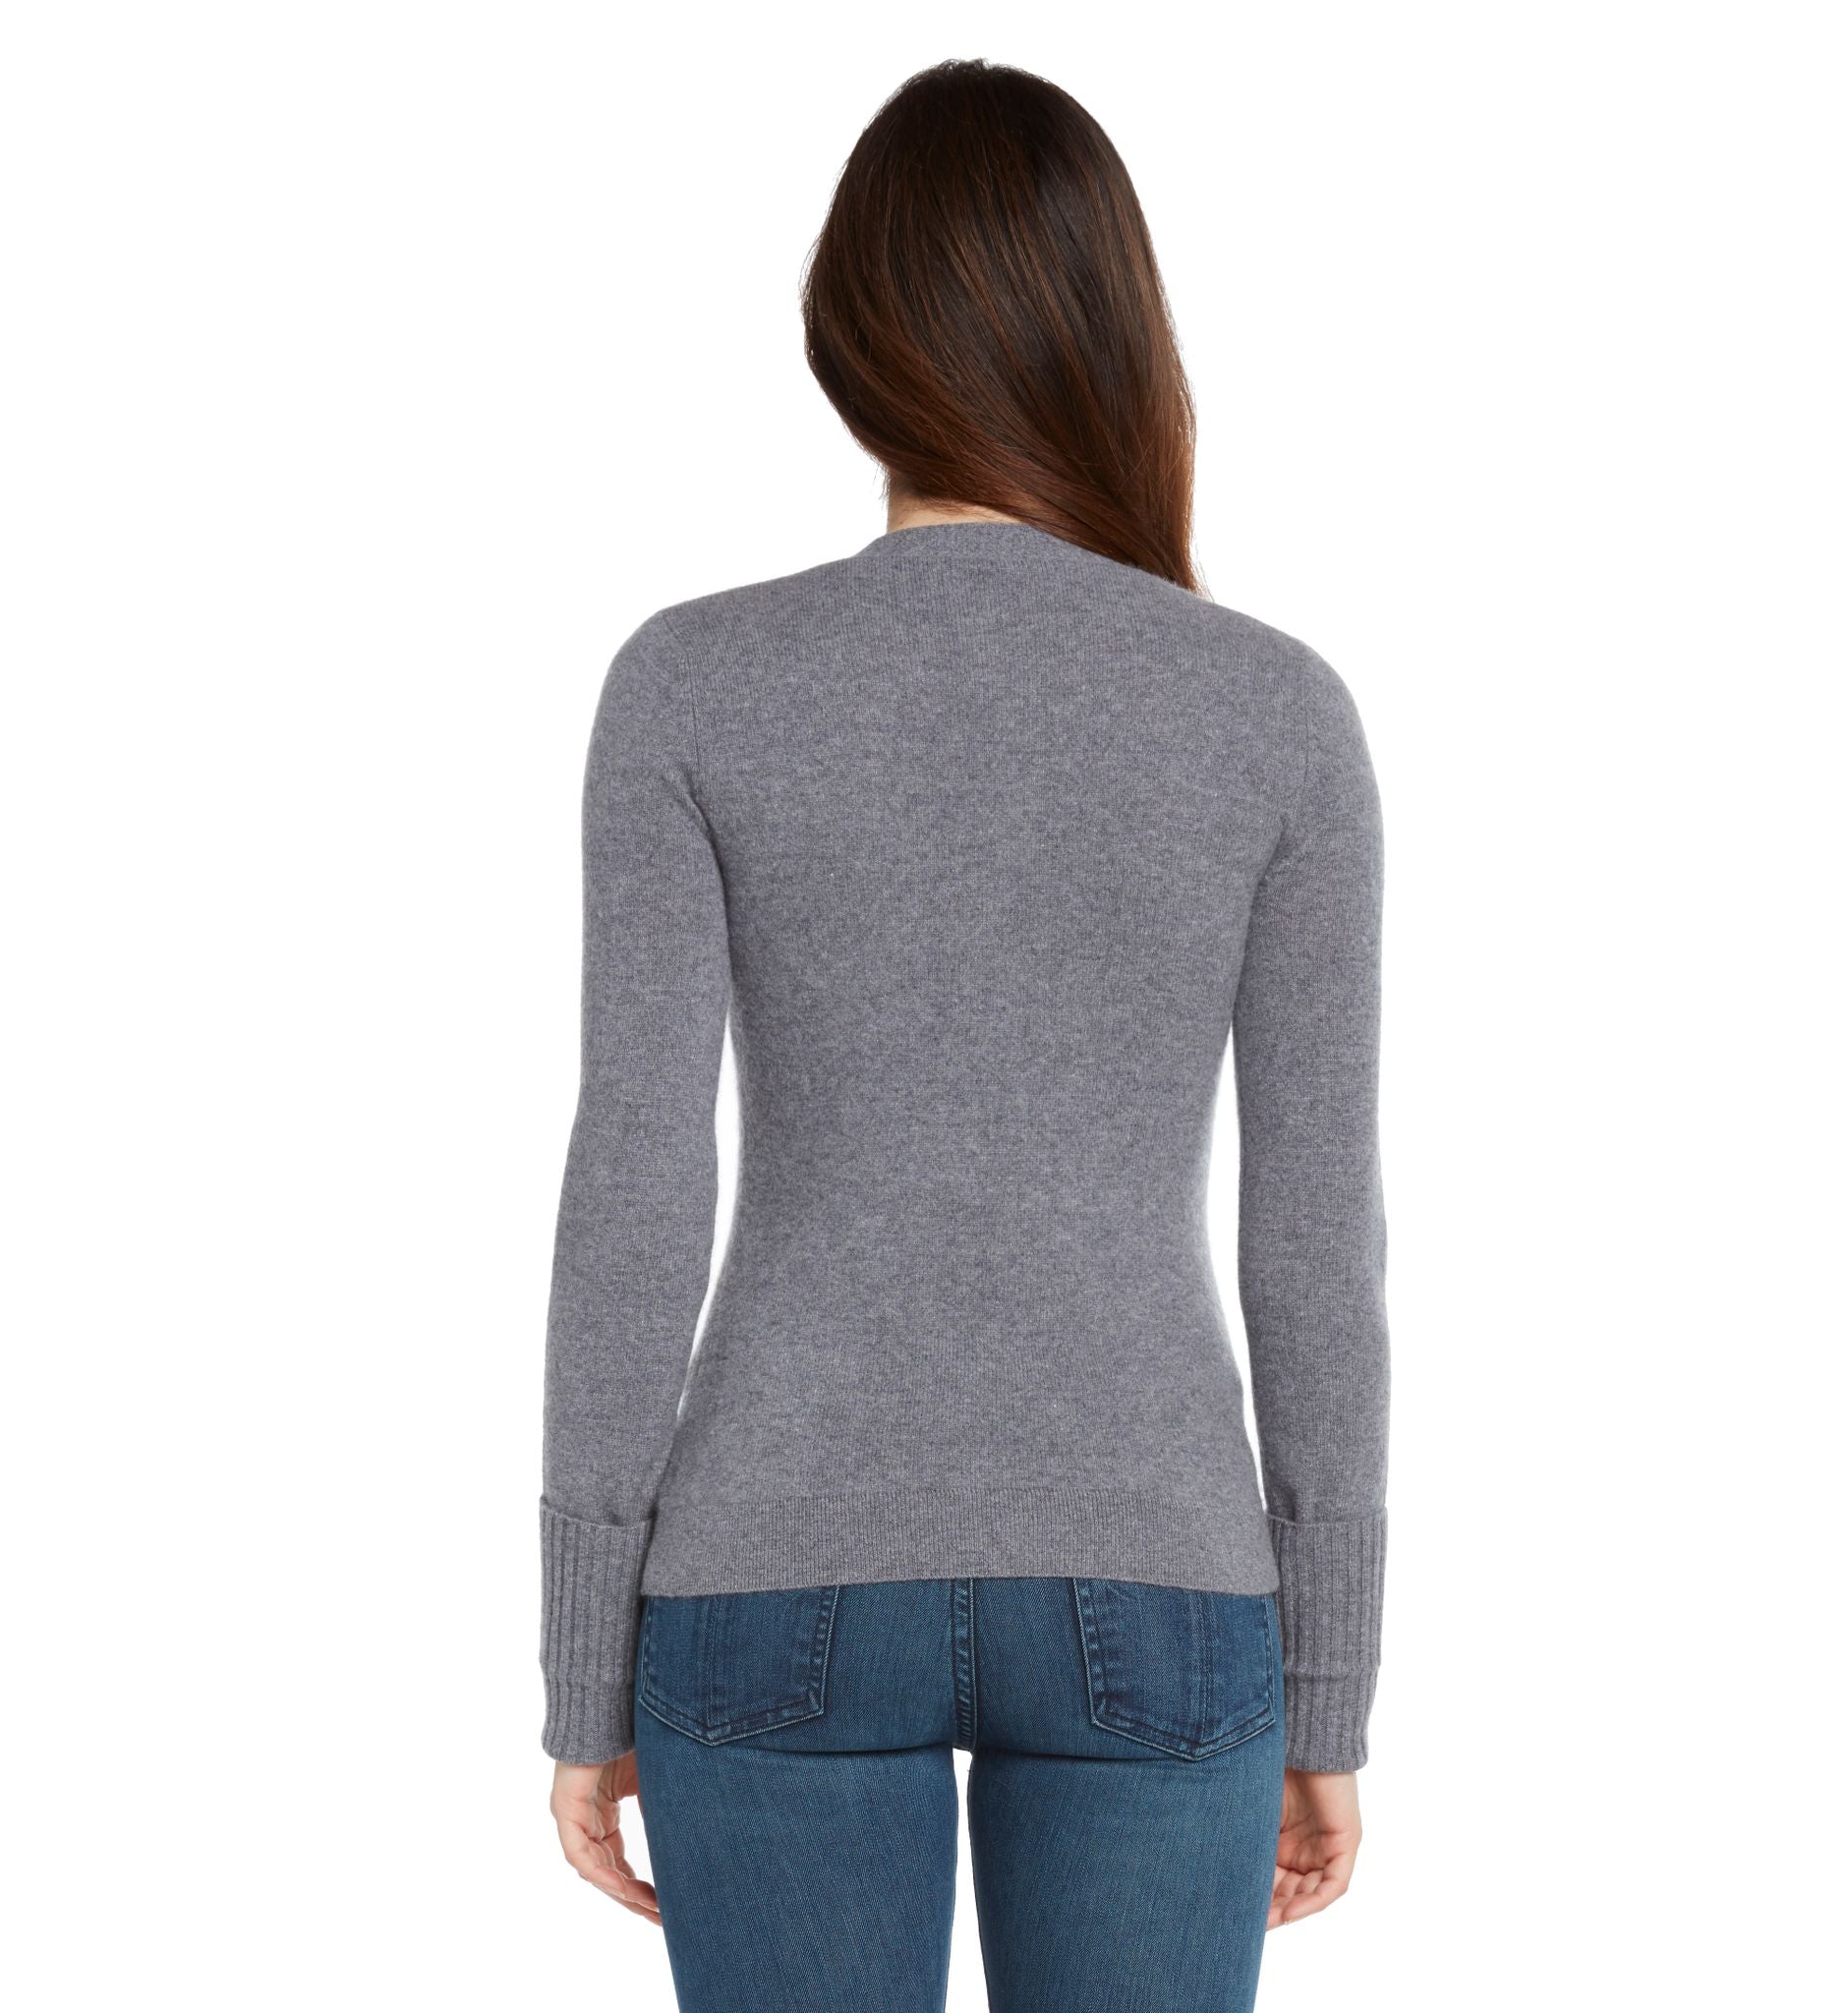 heather grey women 100% cashmere v neck cardigan sweater 